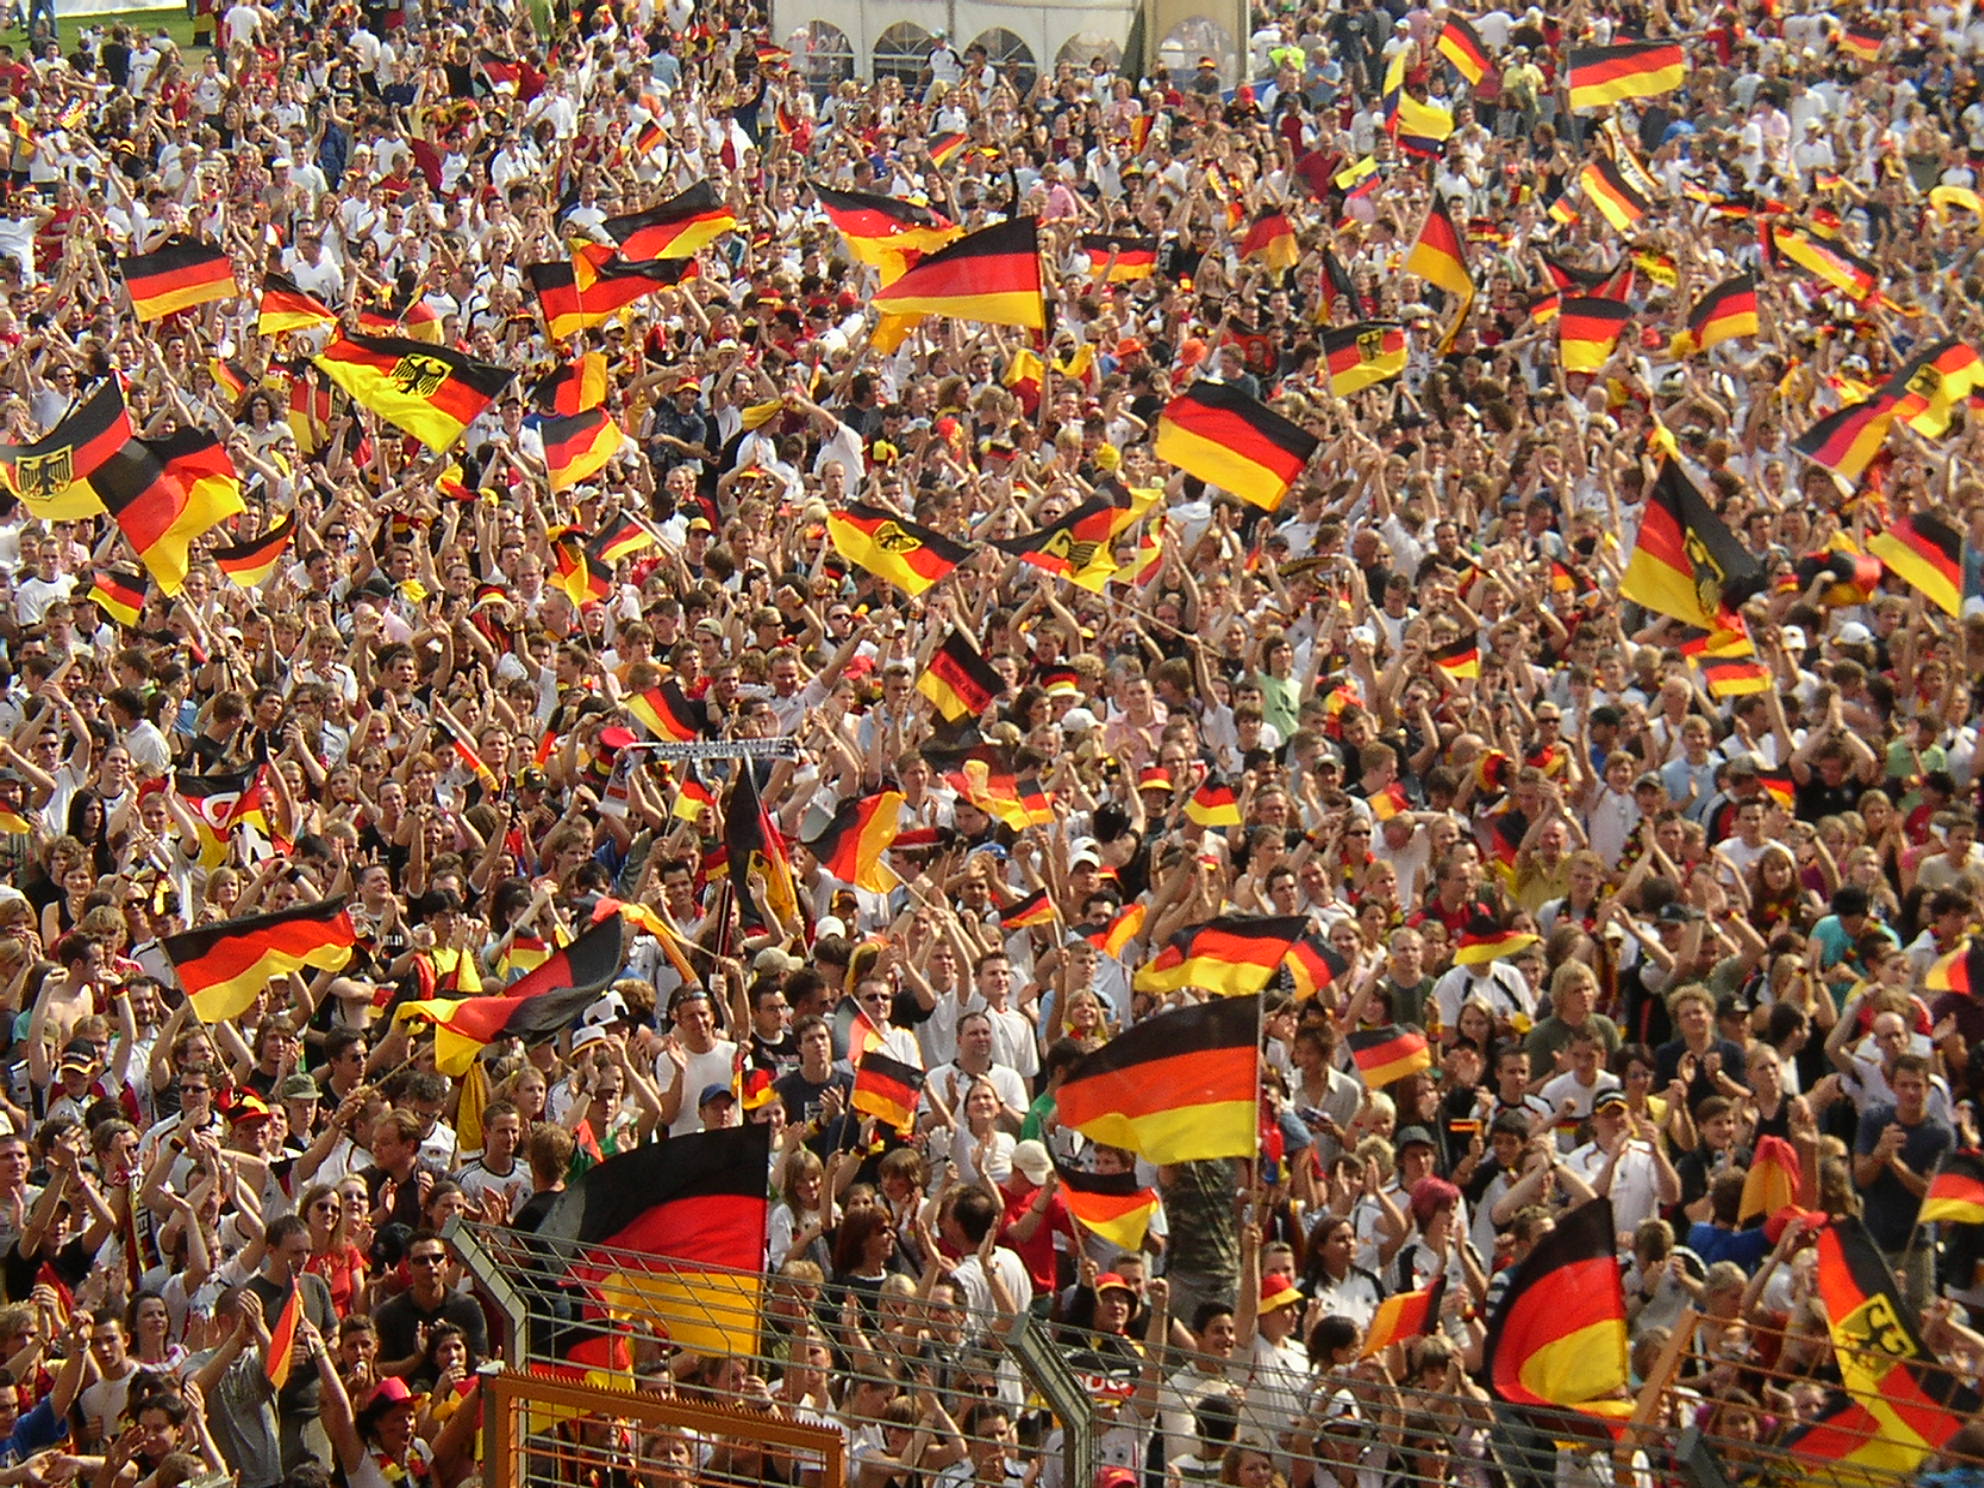 http://waldointernationalclub.files.wordpress.com/2009/11/world_cup_2006_german_fans_at_bochum.jpg